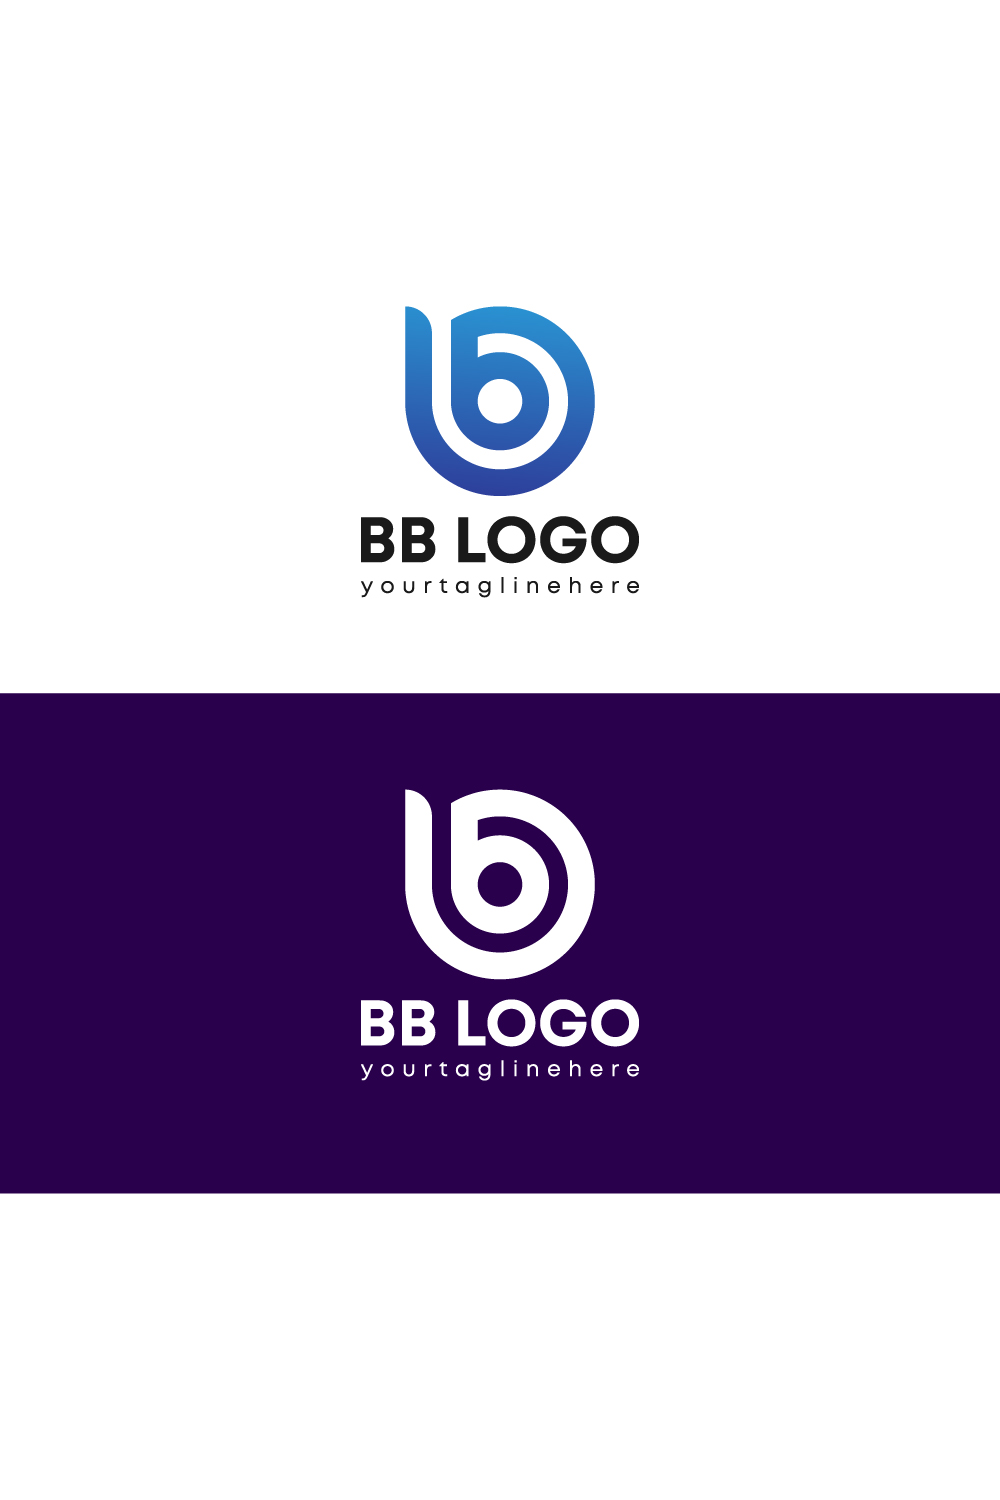 BB logo pinterest preview image.